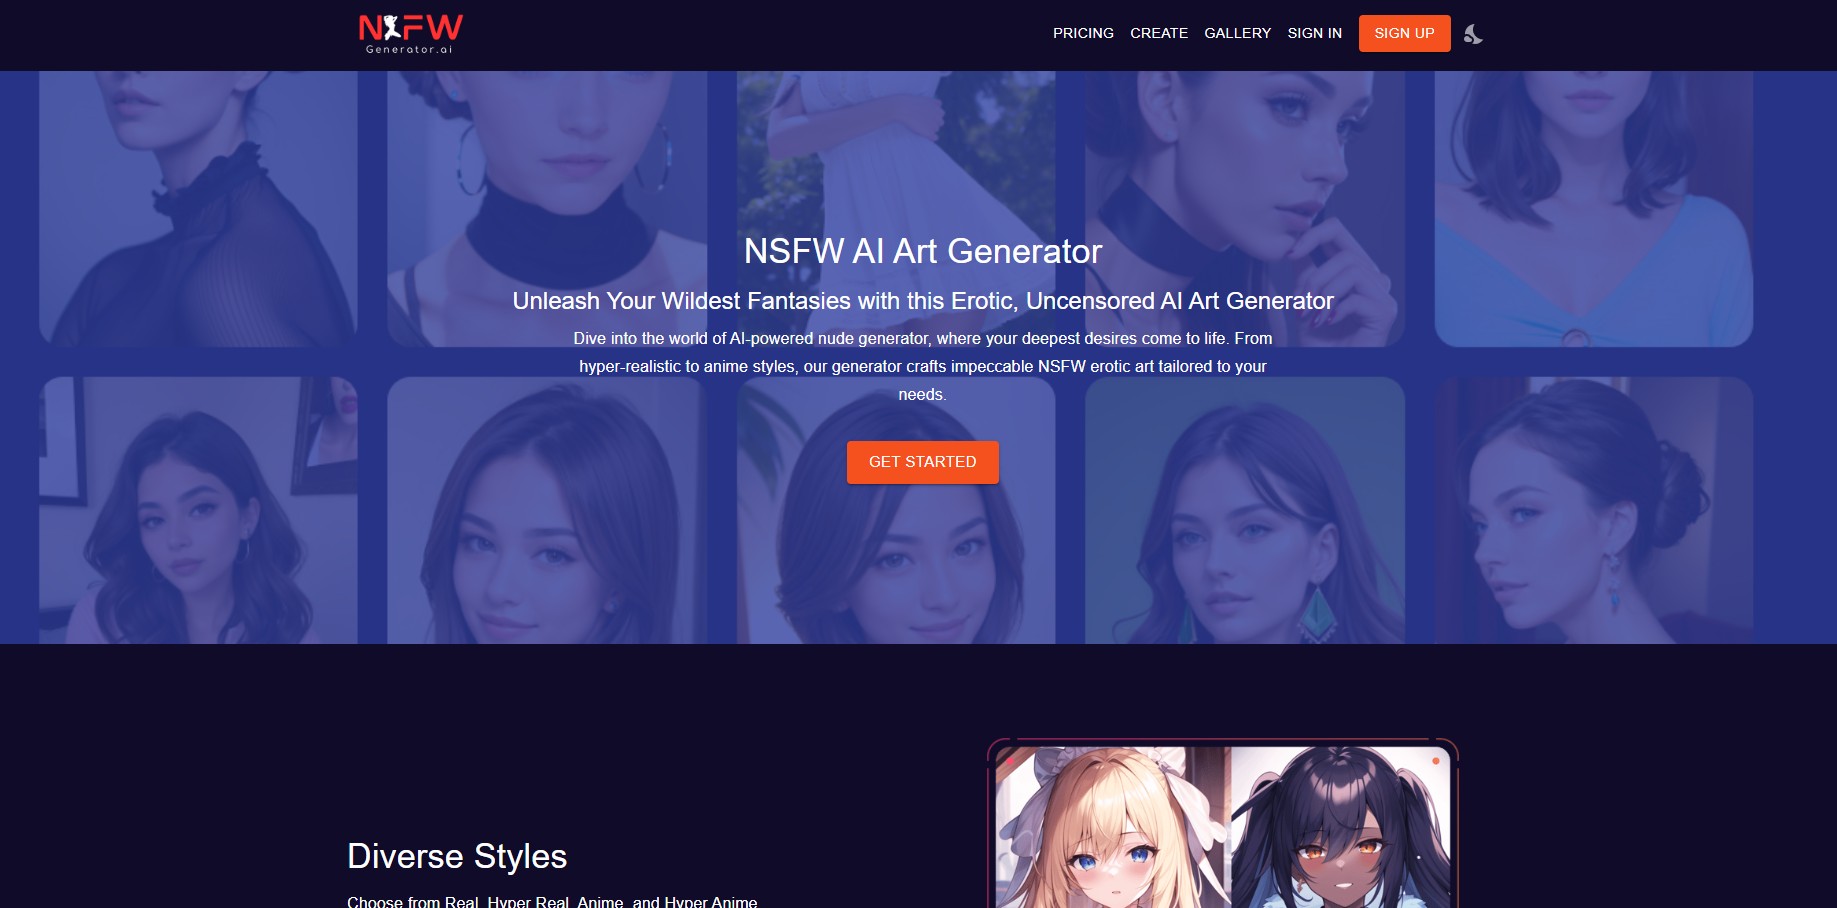 NSFW Art Generator Homepage Image